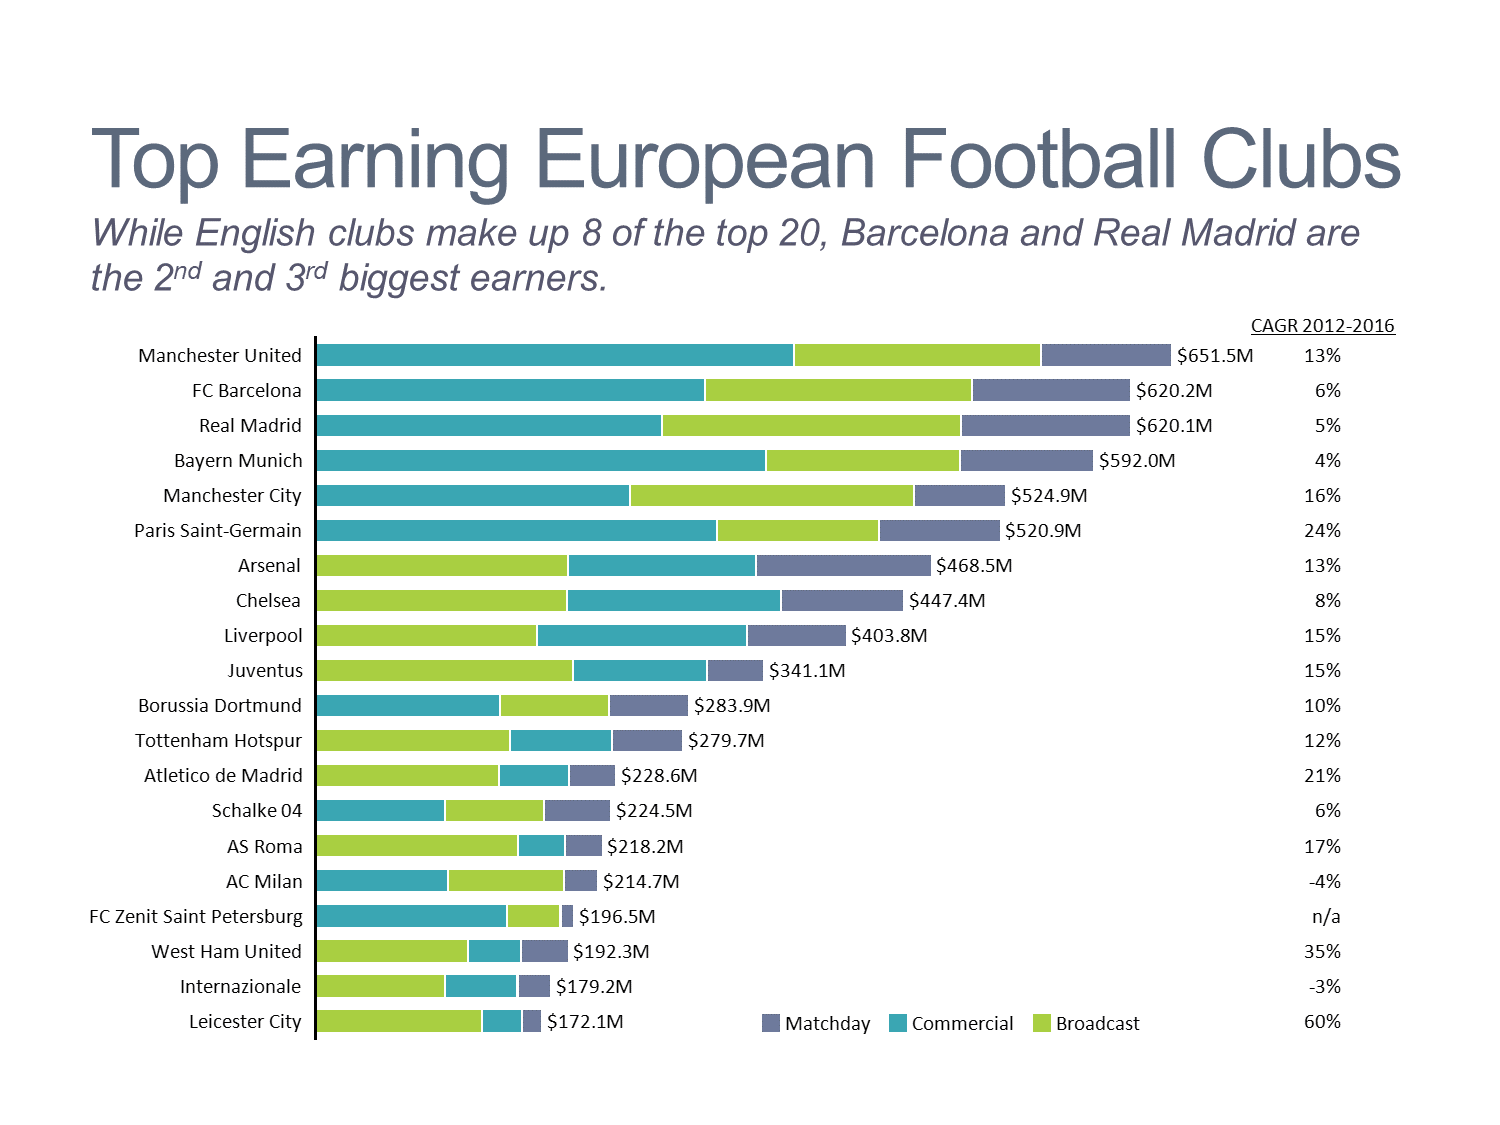 Top Earning Football Clubs Bar Chart